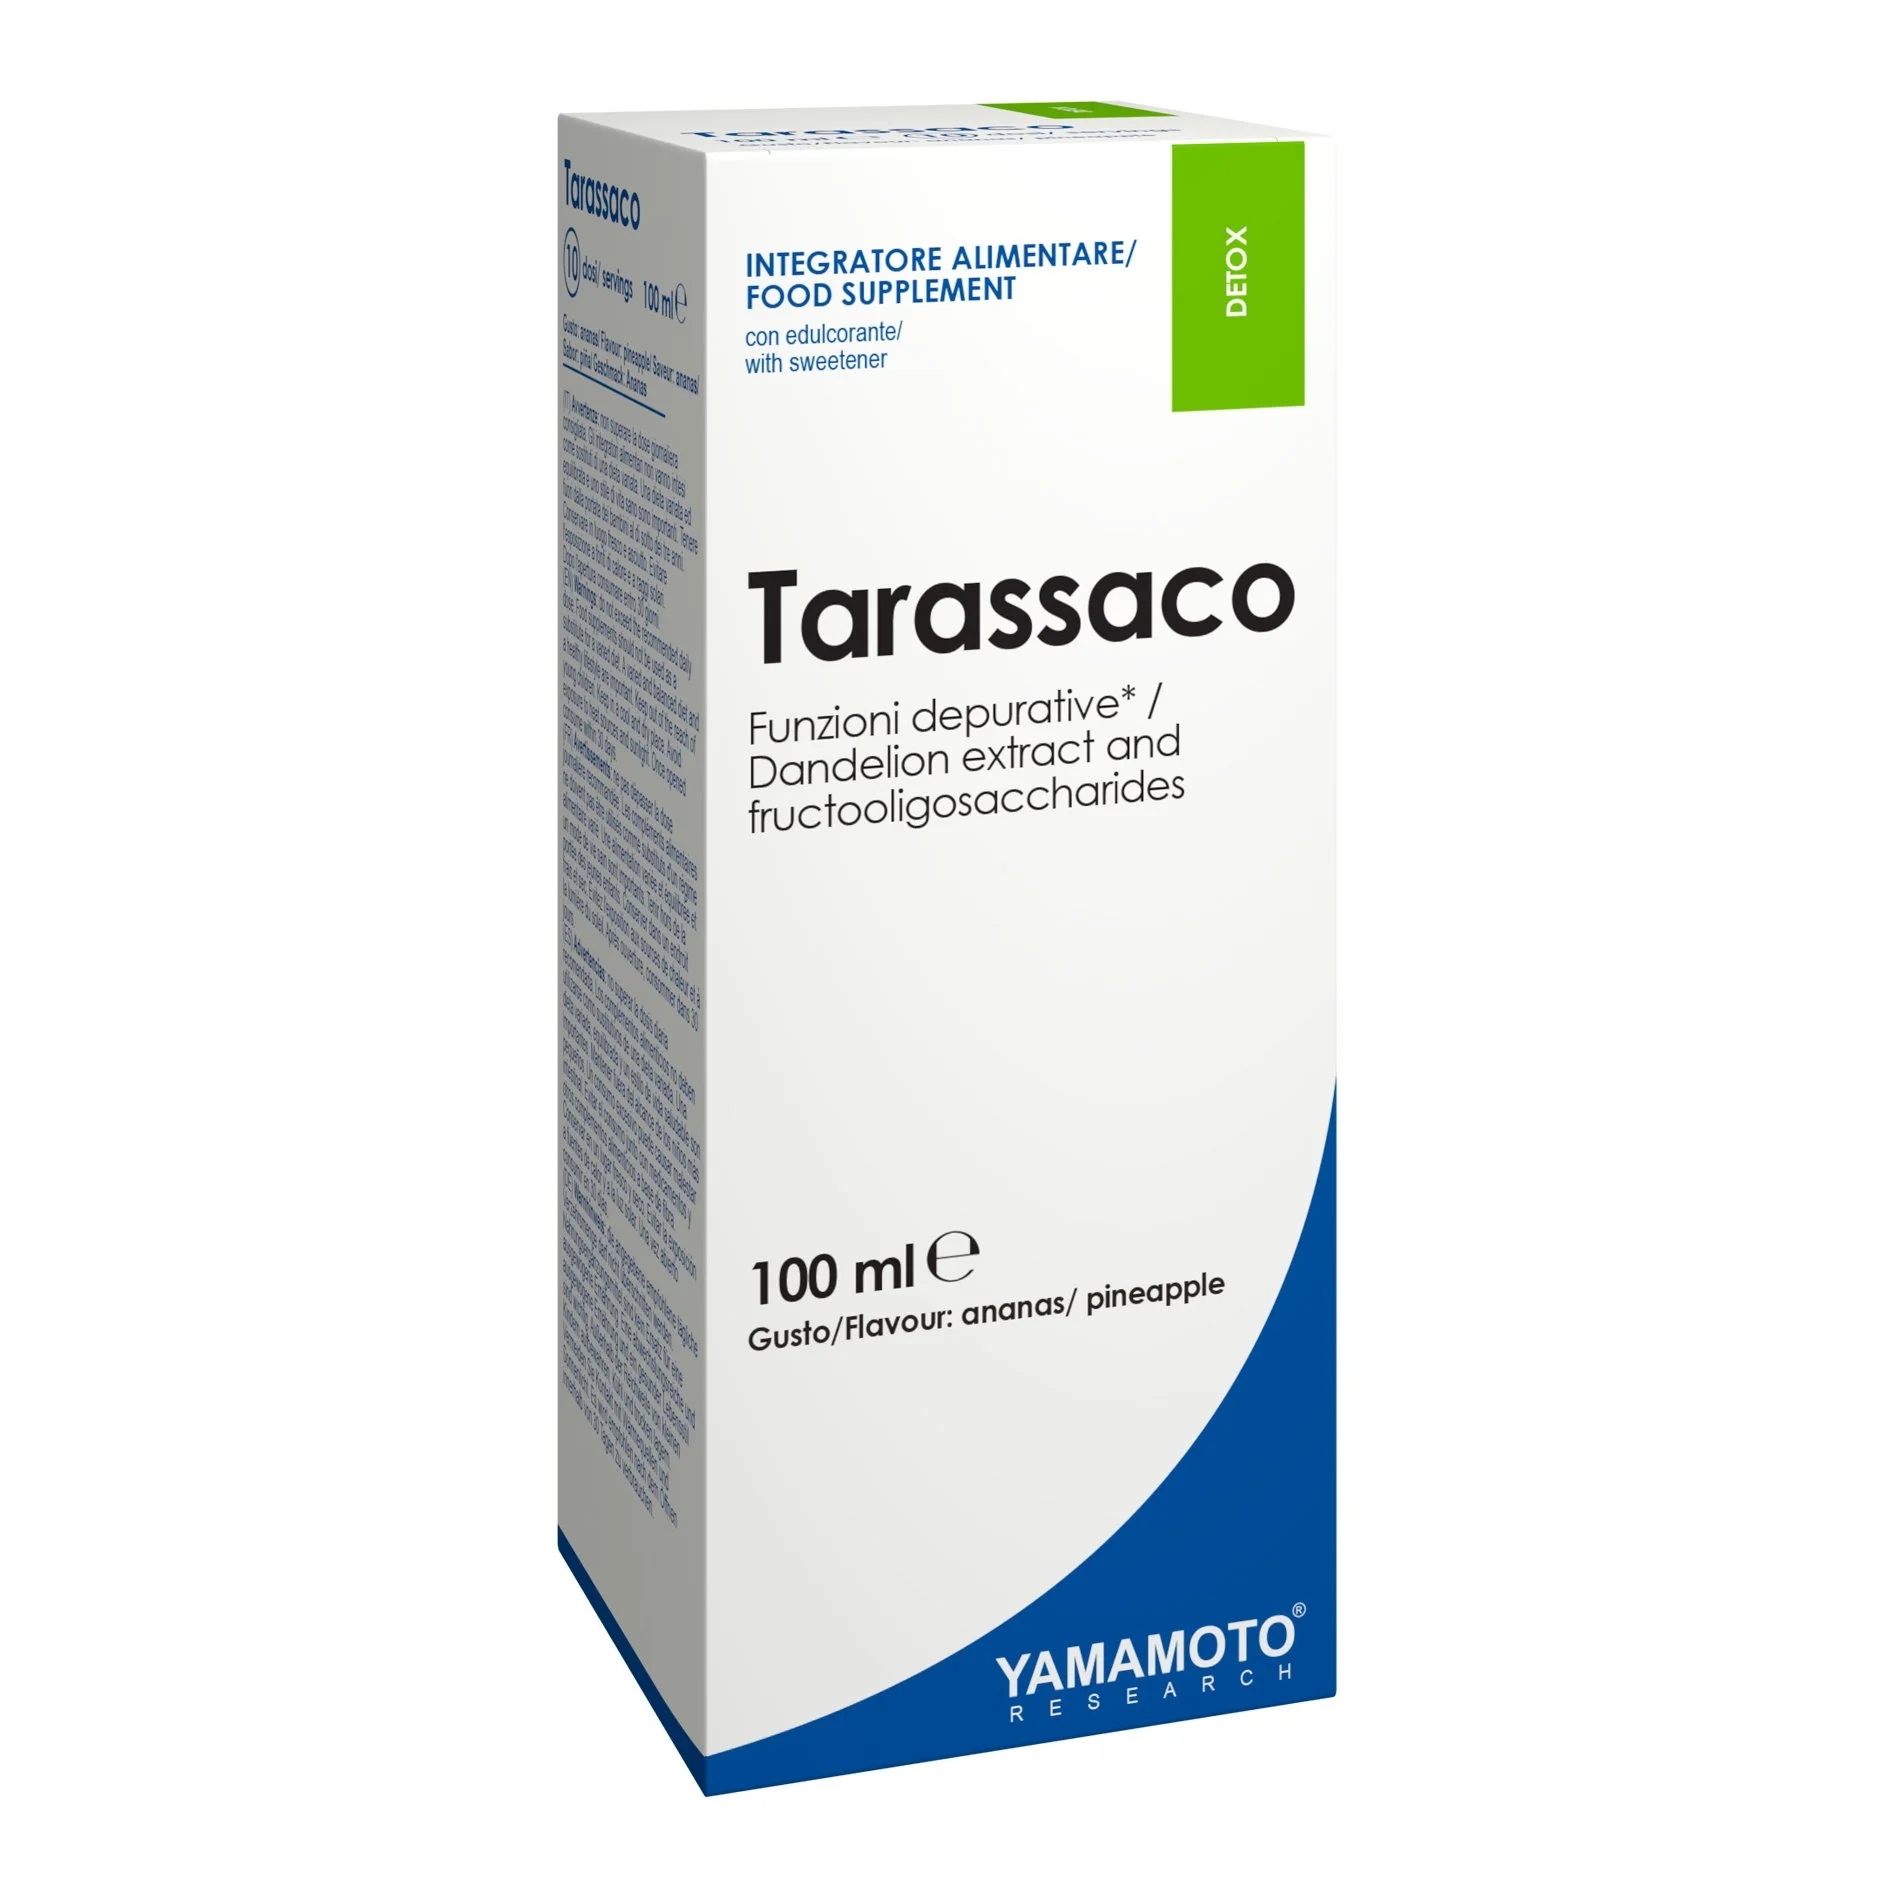 Yamamoto Natural Series Tarassaco 100 ml / 10 doses